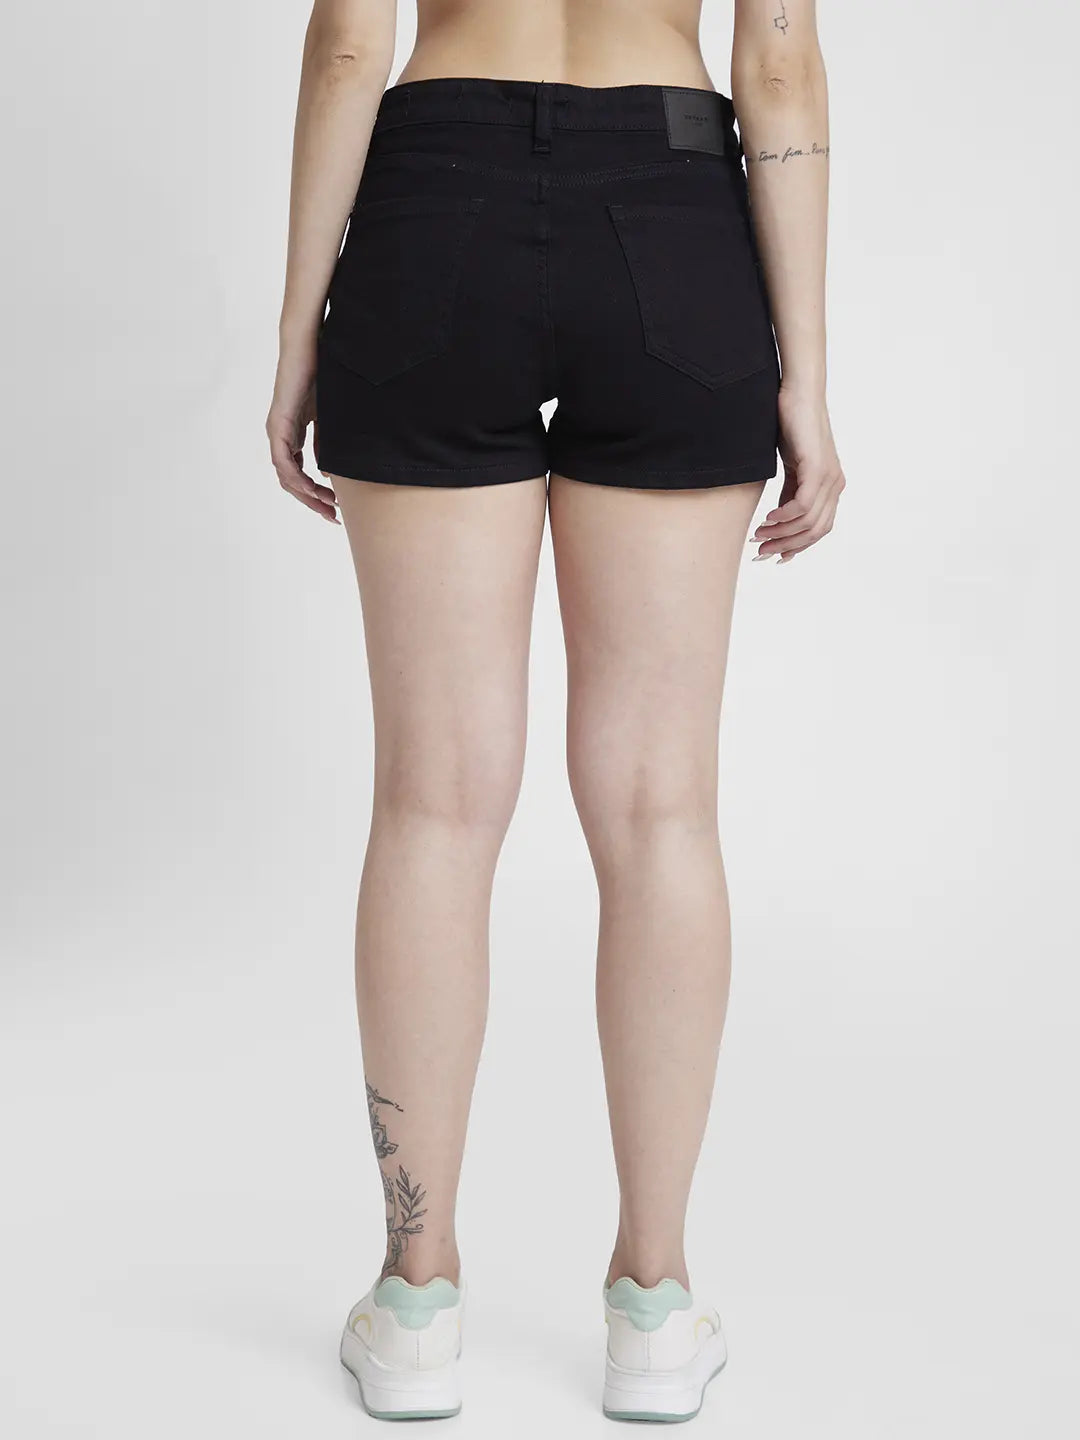 Buy MONTREZ Solid Women Denim Black Denim Shorts (30, Black) at Amazon.in